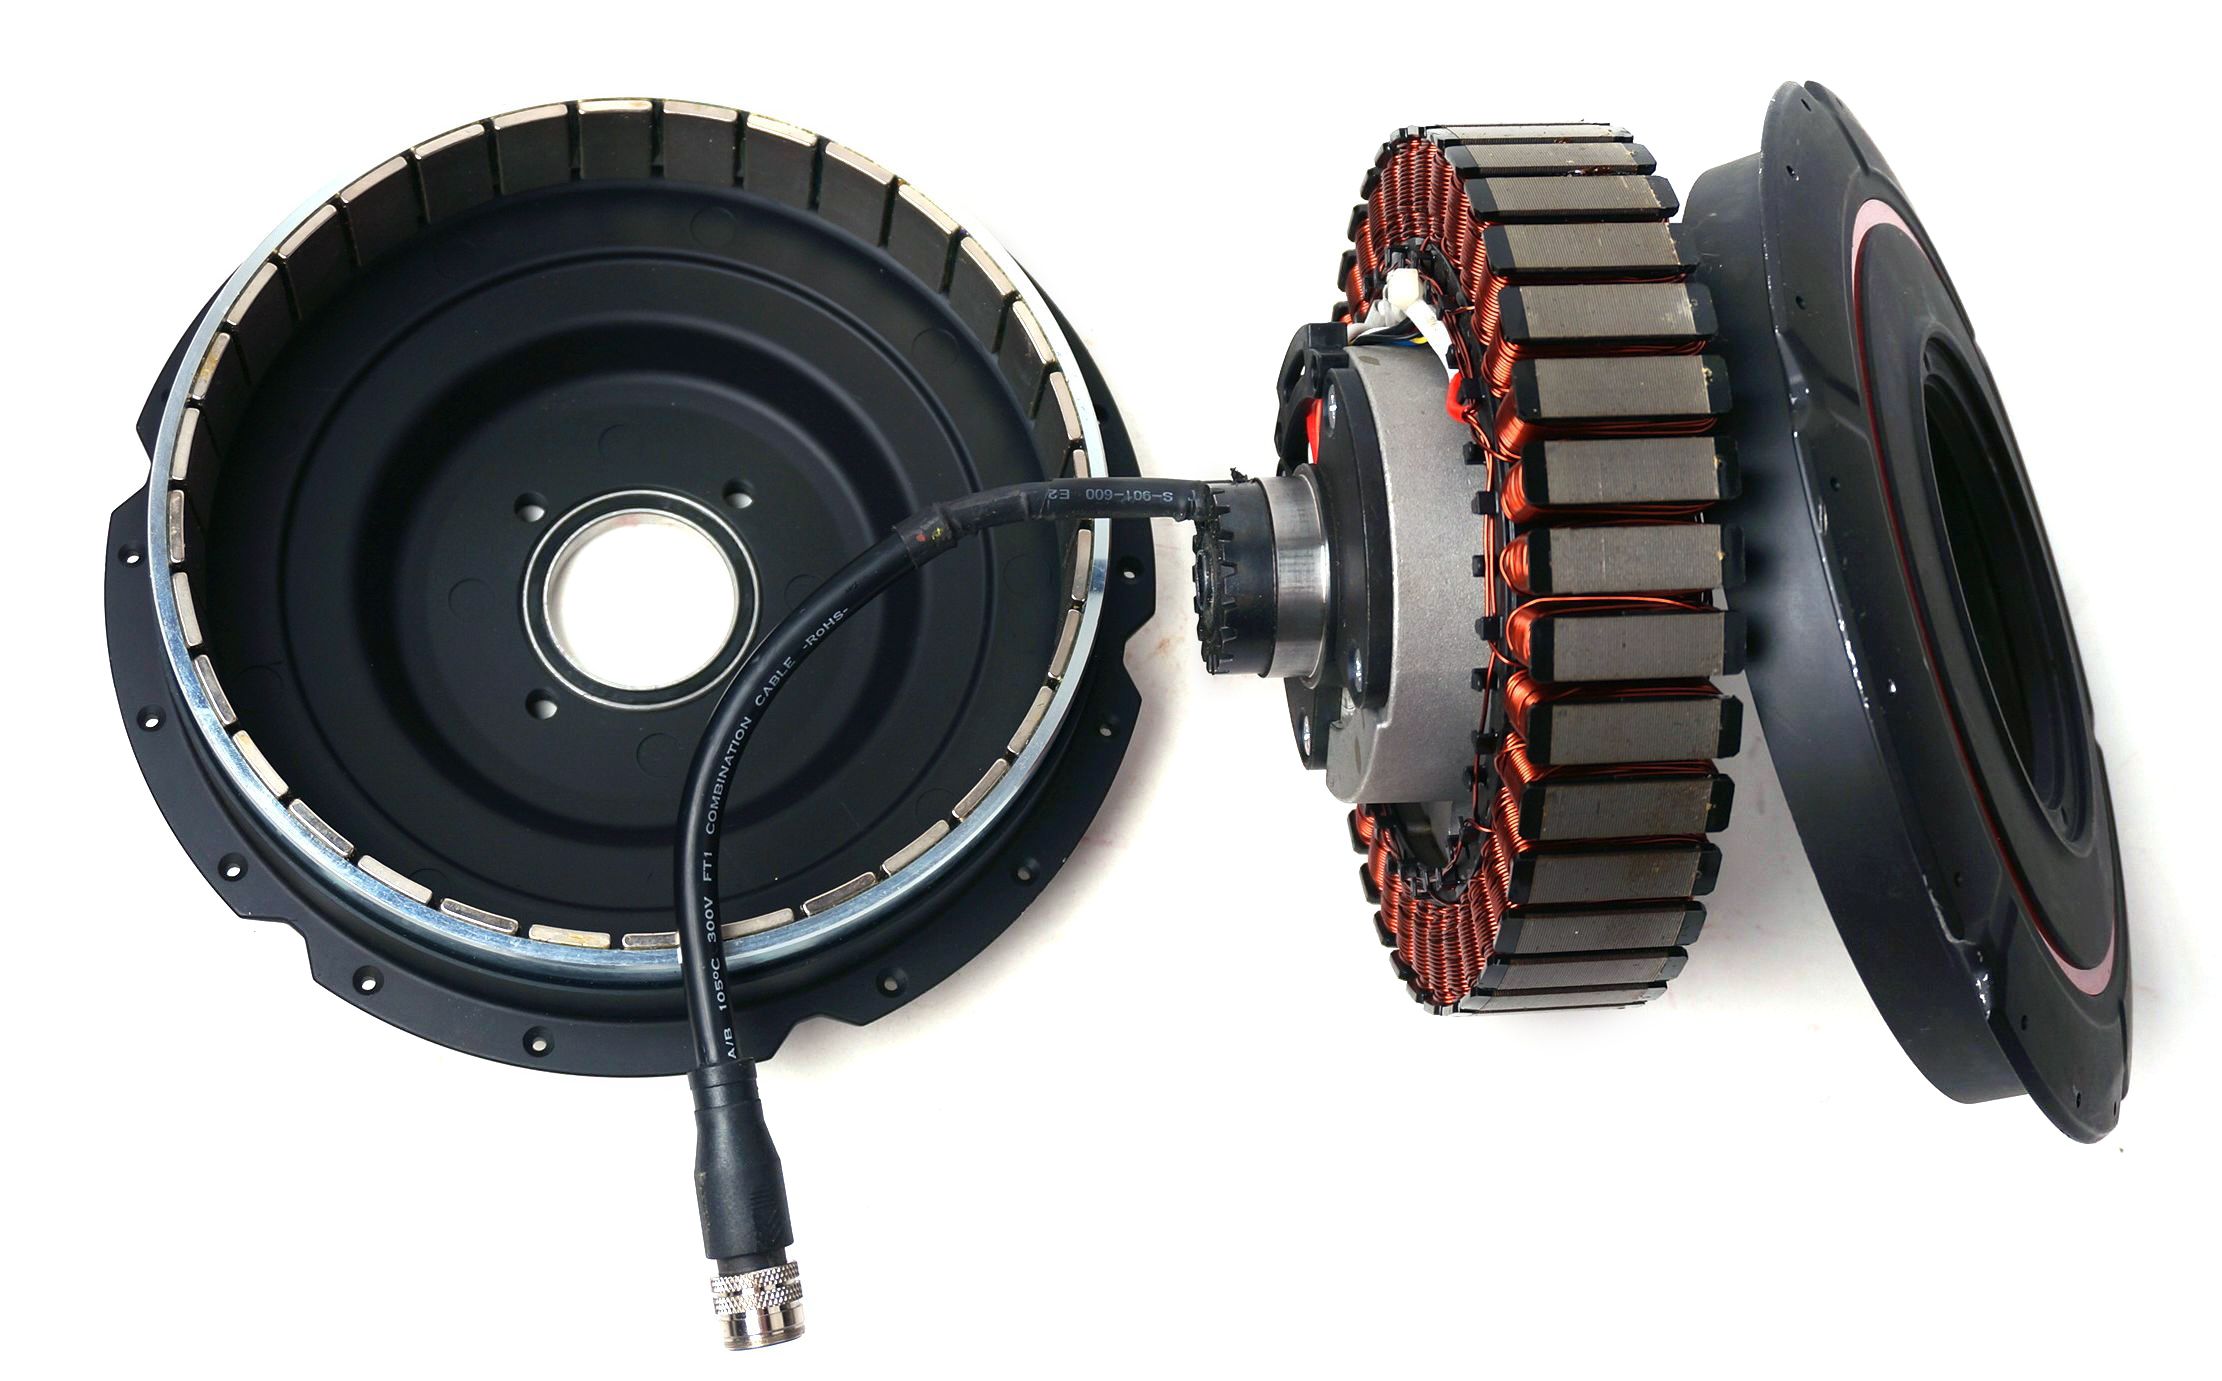 types of hub motor